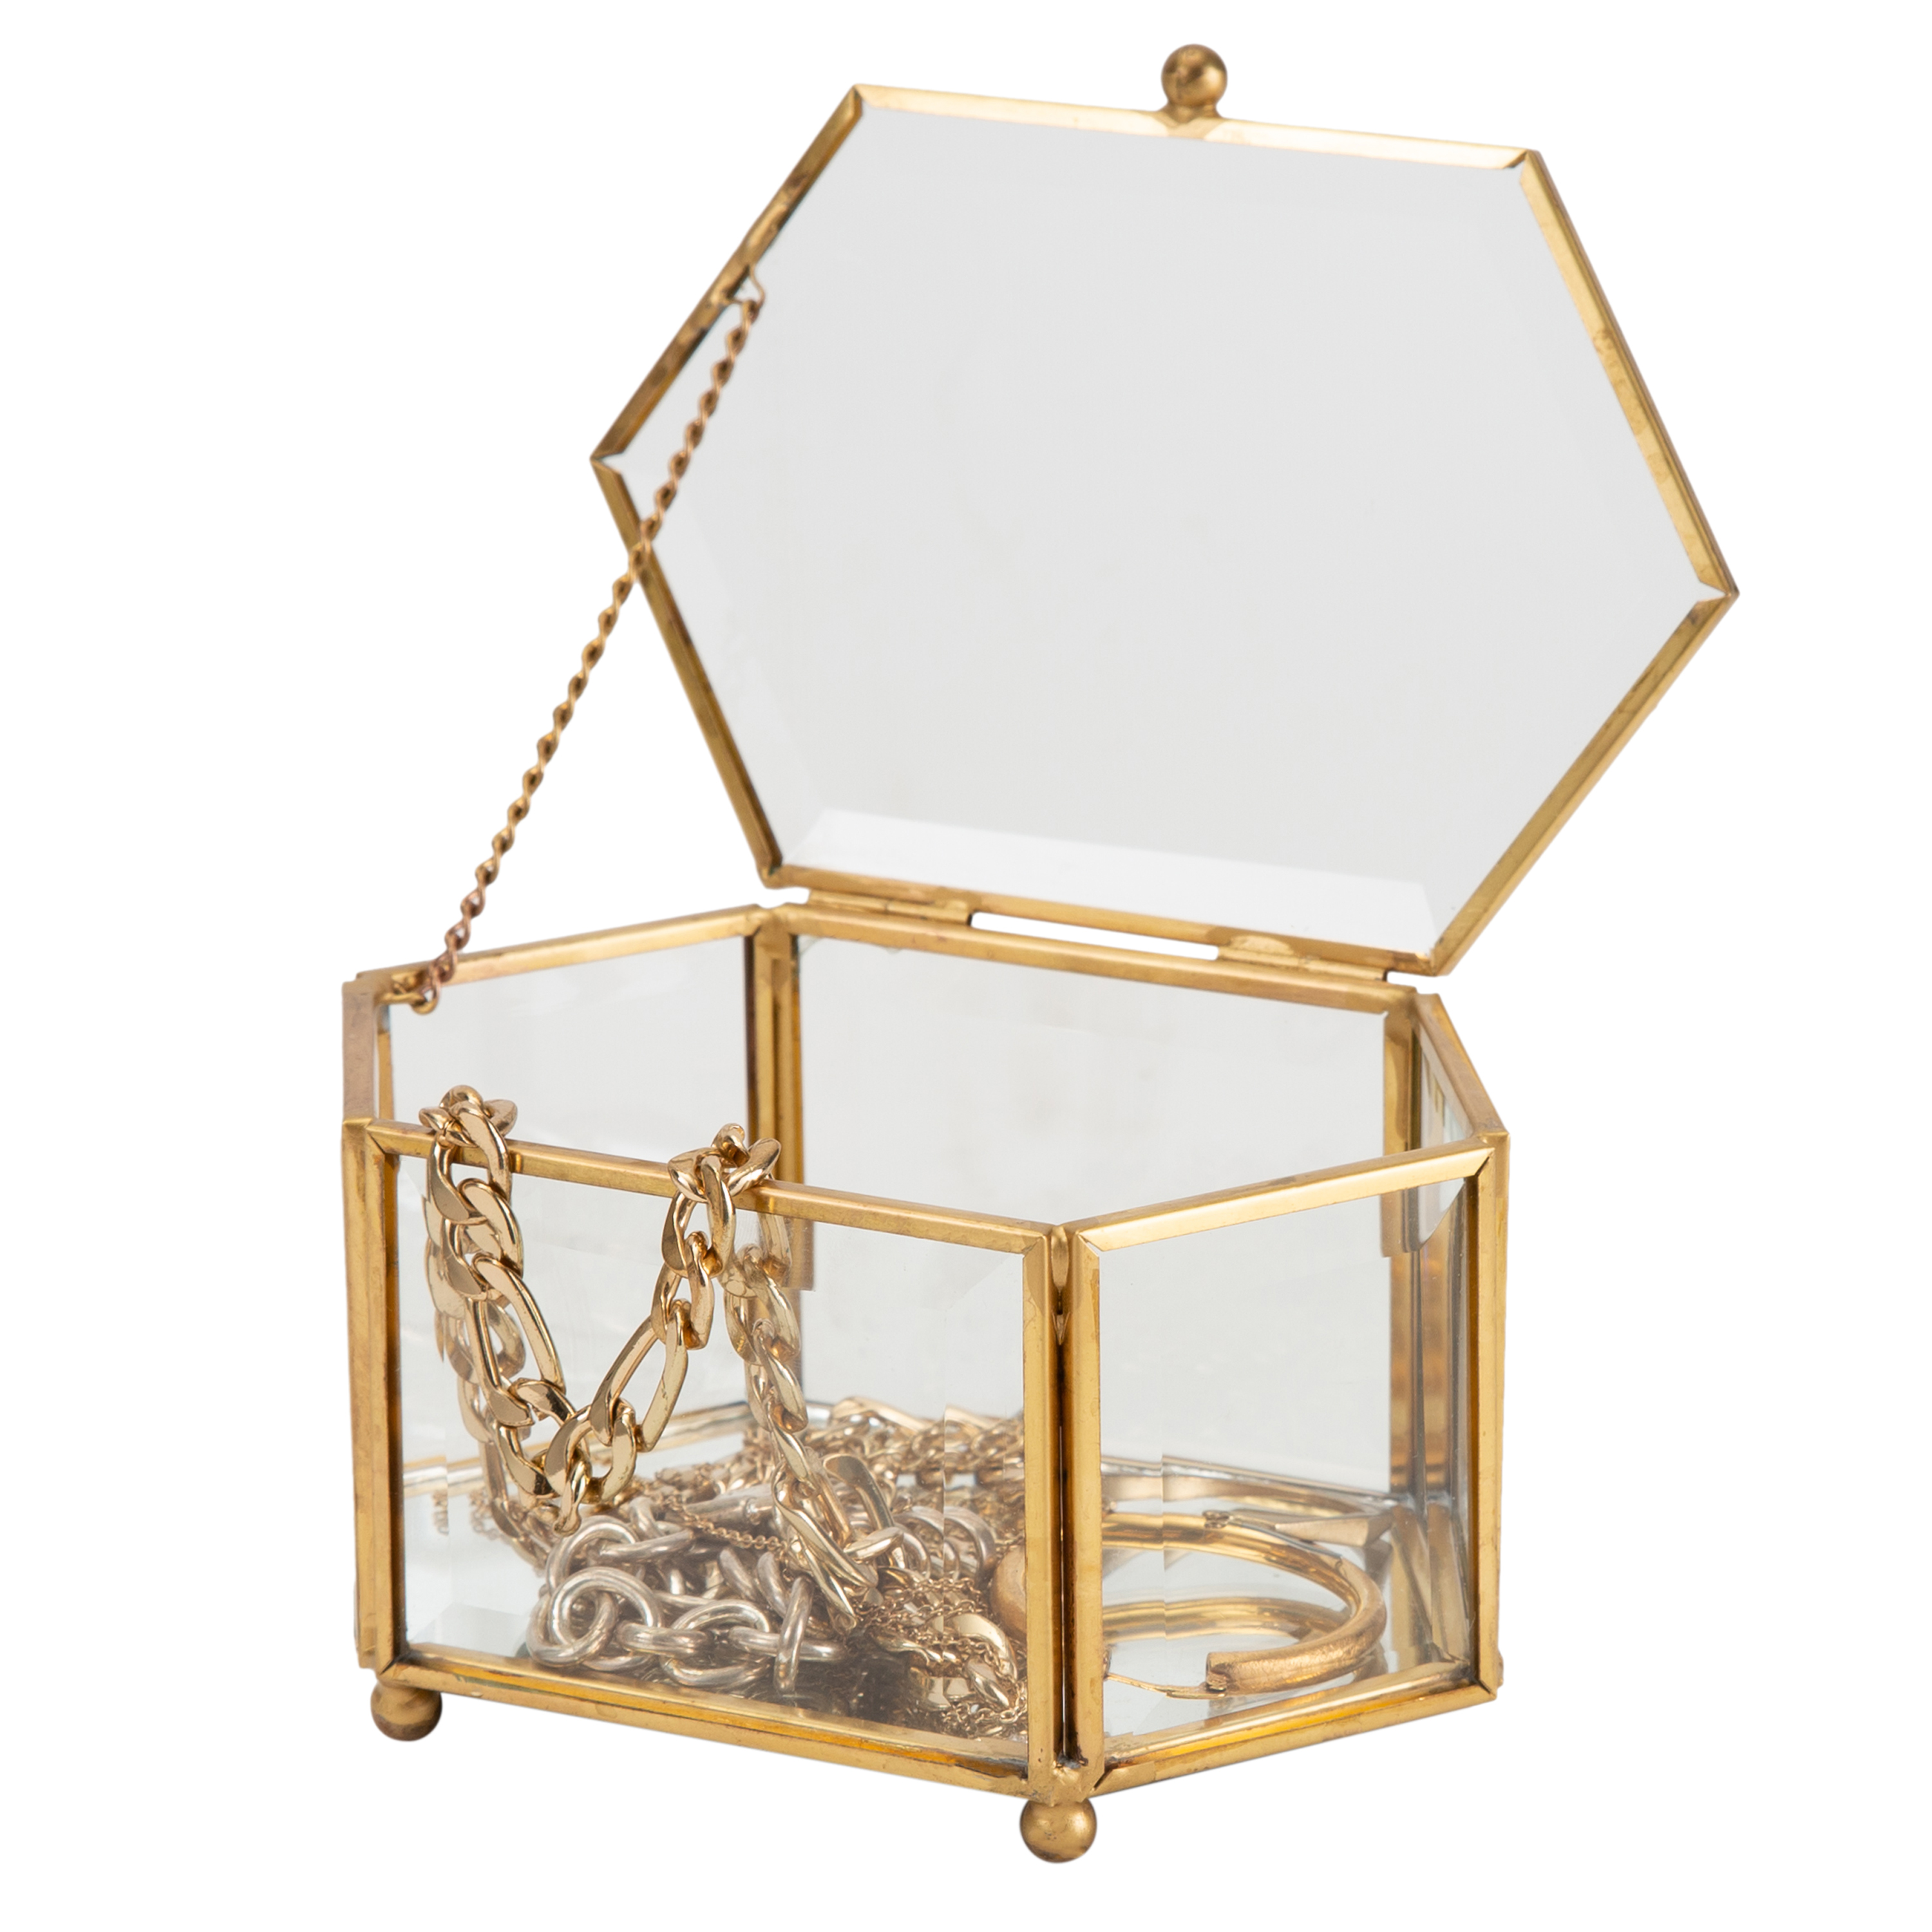 Home Details Vintage Mirrored Bottom Diamond Shape Glass Keepsake Box in Gold - image 5 of 9